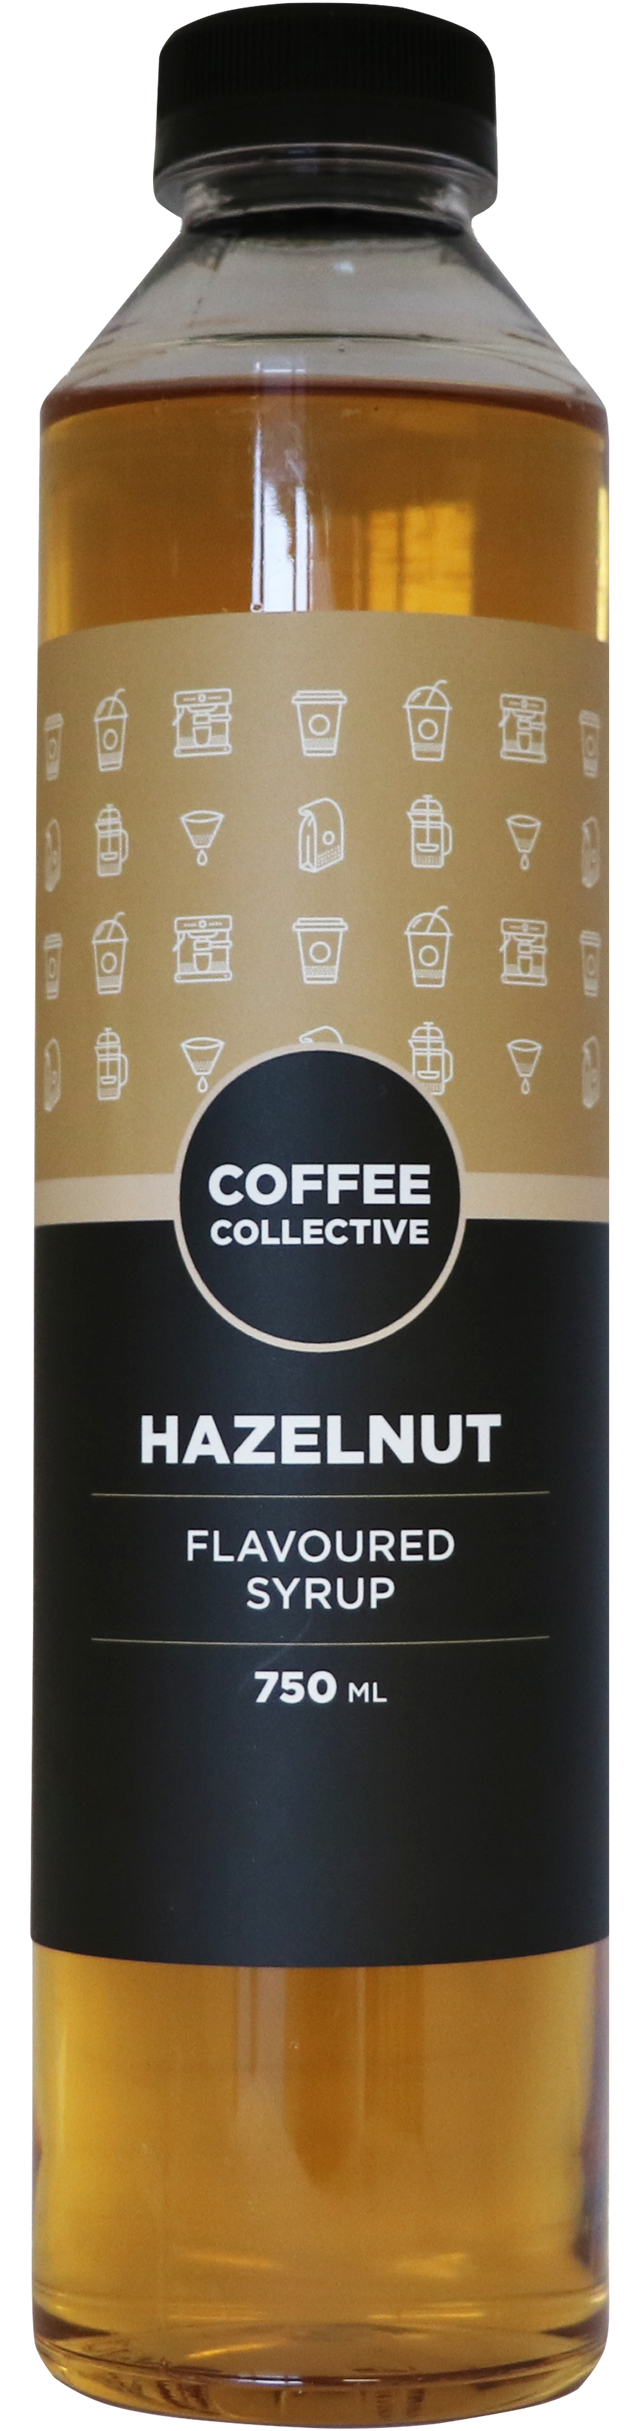 Coffee Collective Syrup - Hazelnut 750ml Bottle